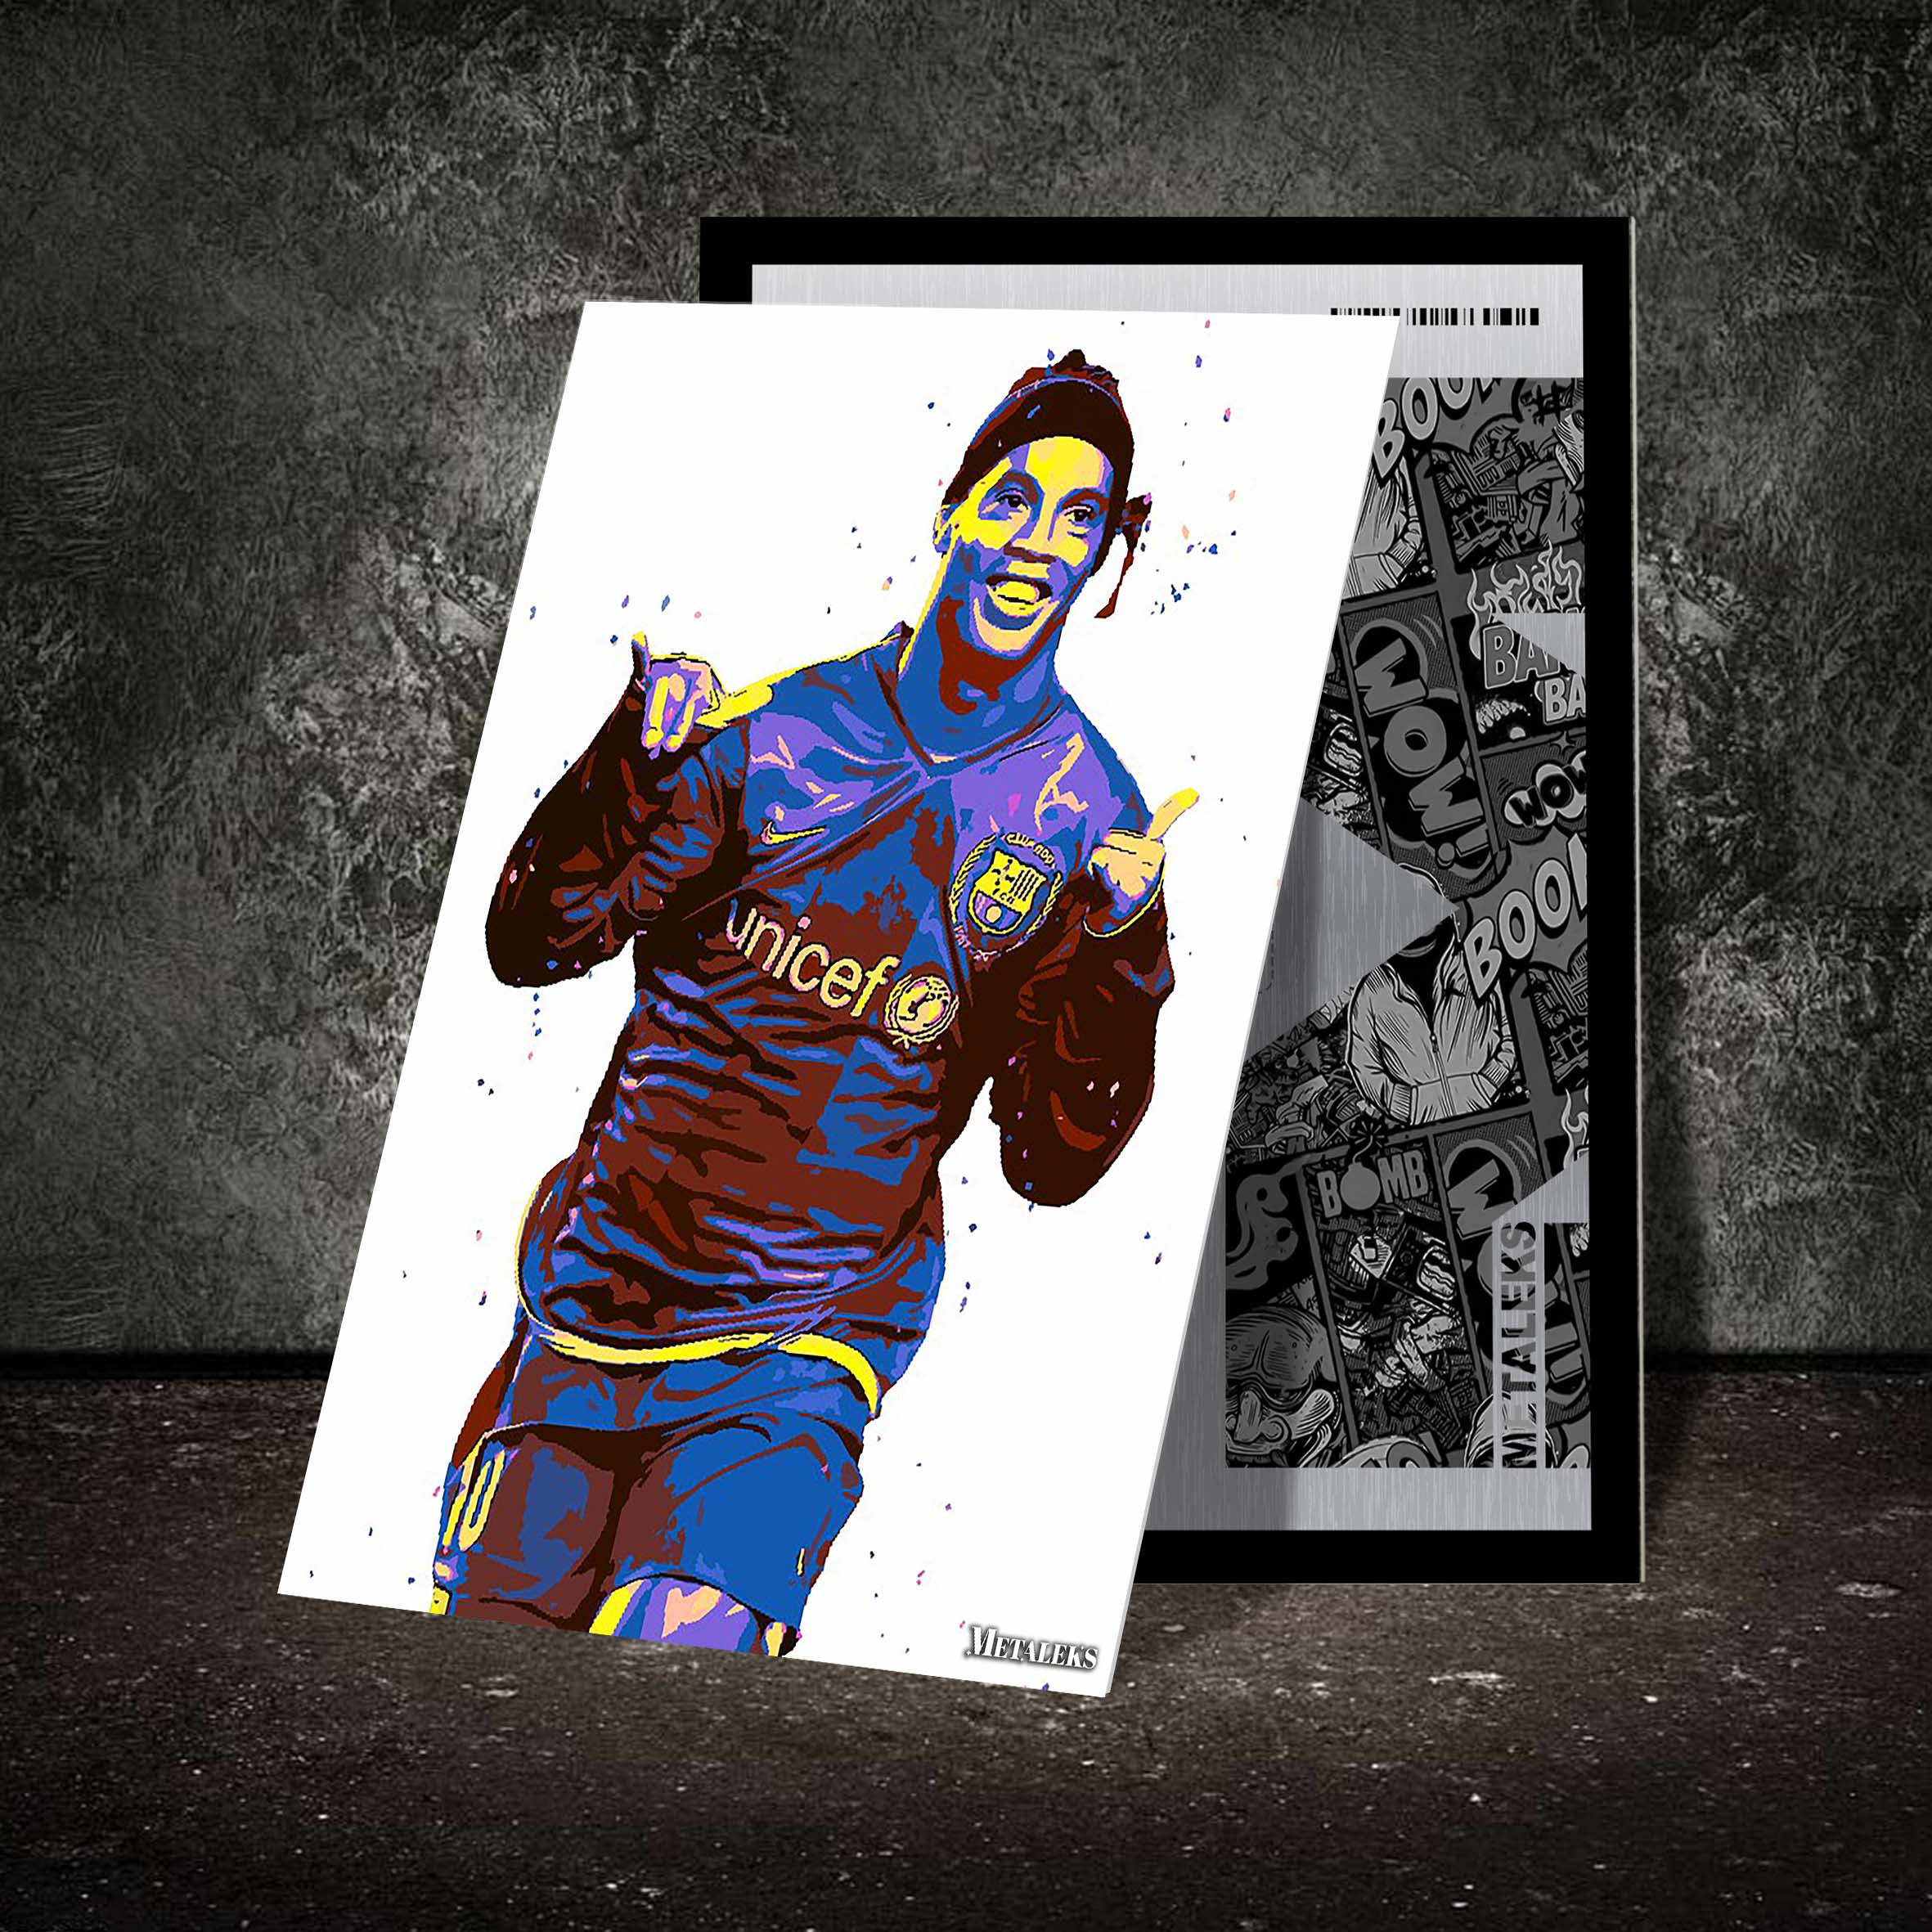 Ronaldinho Legend-designed by @Nadhifsaoqi